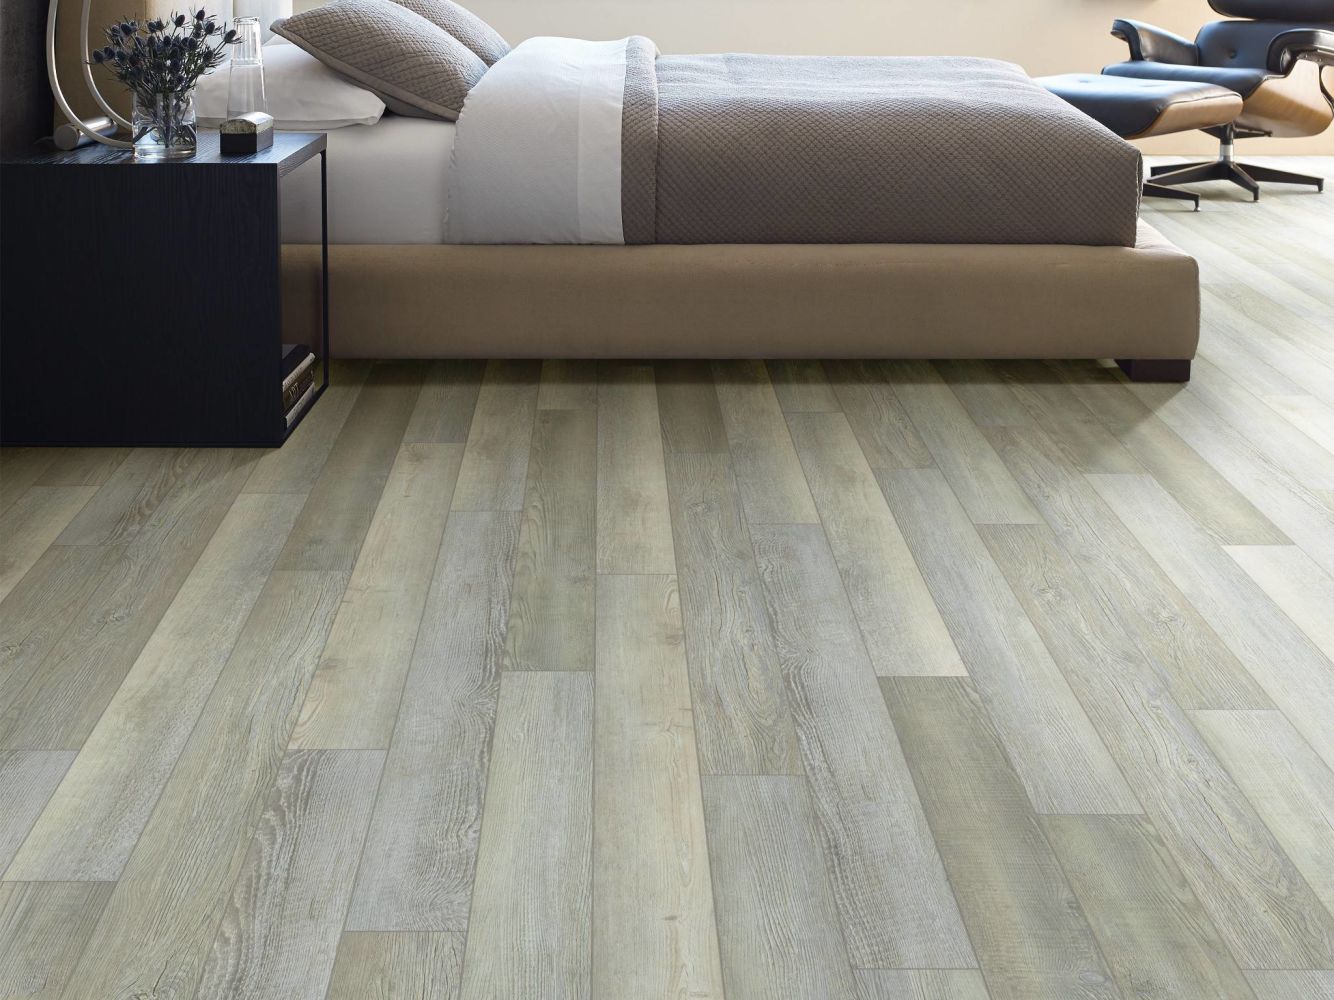 Shaw Floors Colortile Spc Cp Aspire 5″ Silo Pine 00190_CV183